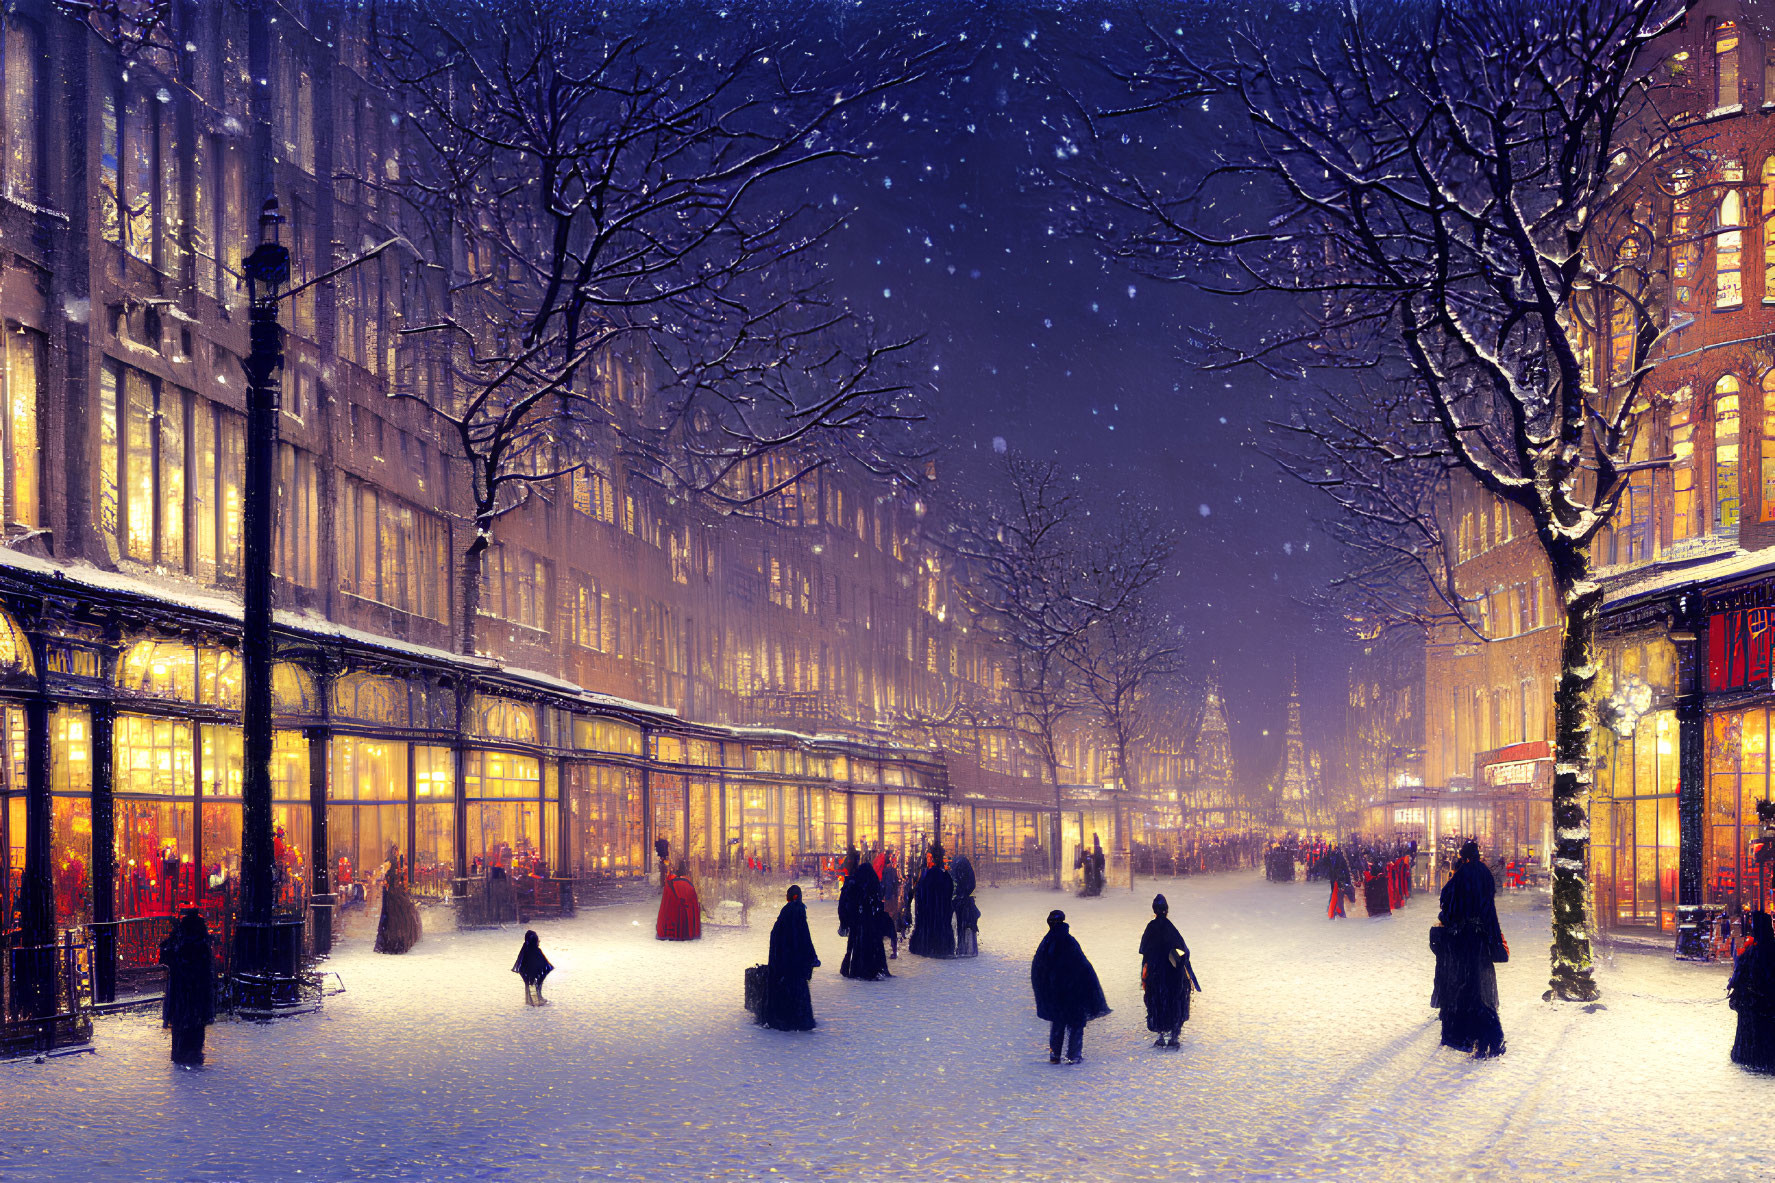 Winter night scene: City street with warm lights, snowfall, and people walking